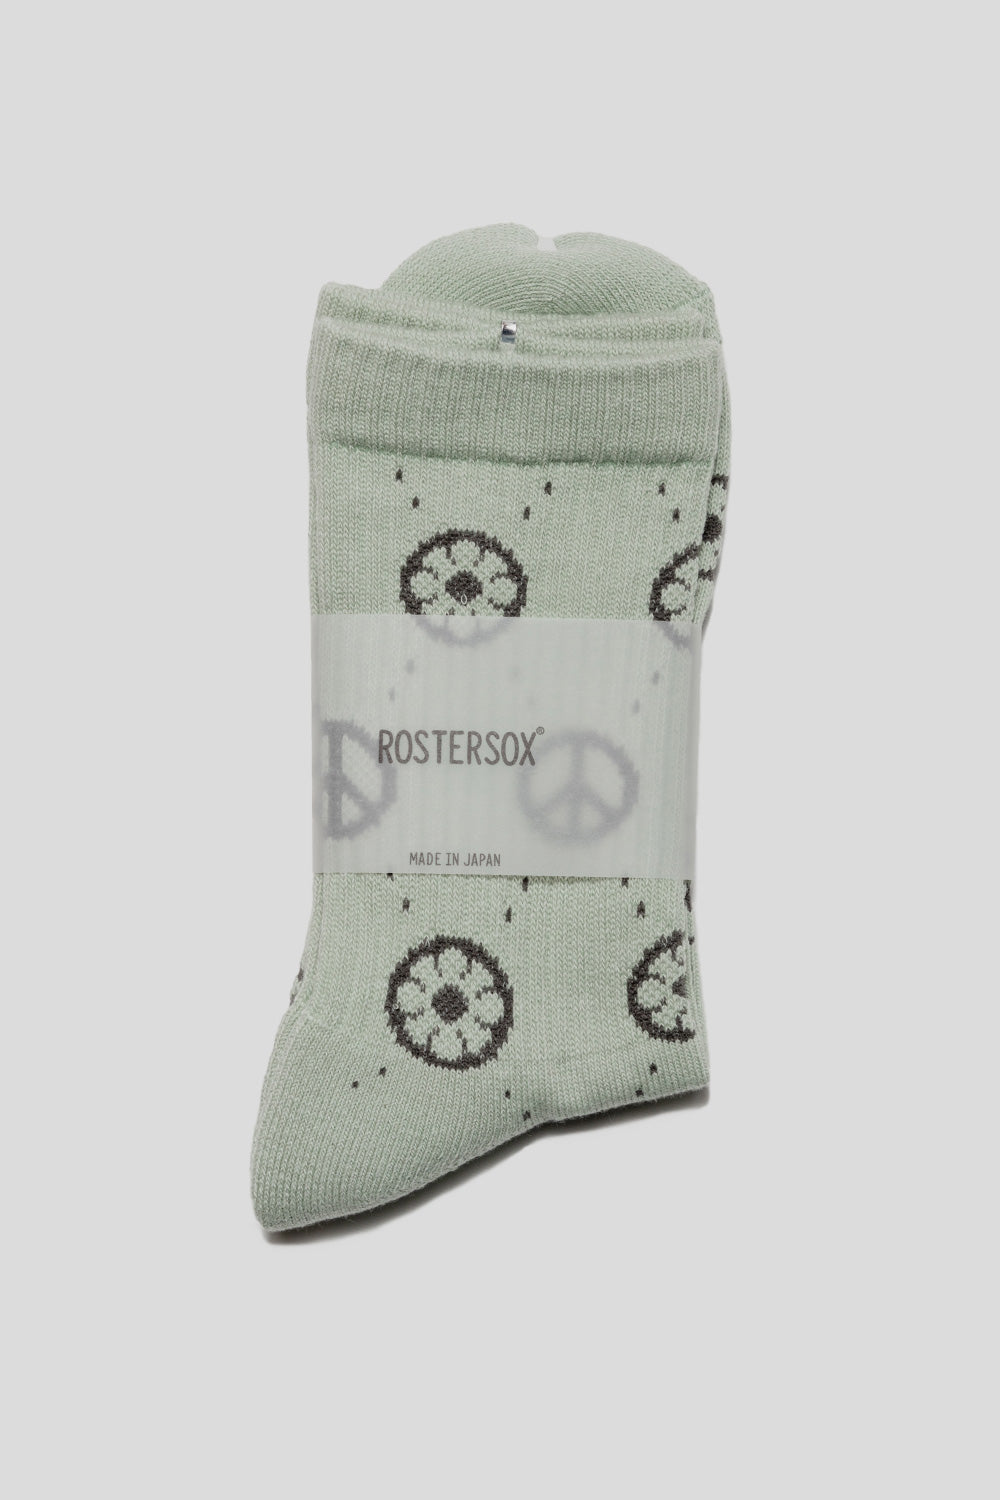 Rostersox HP Socks in Green